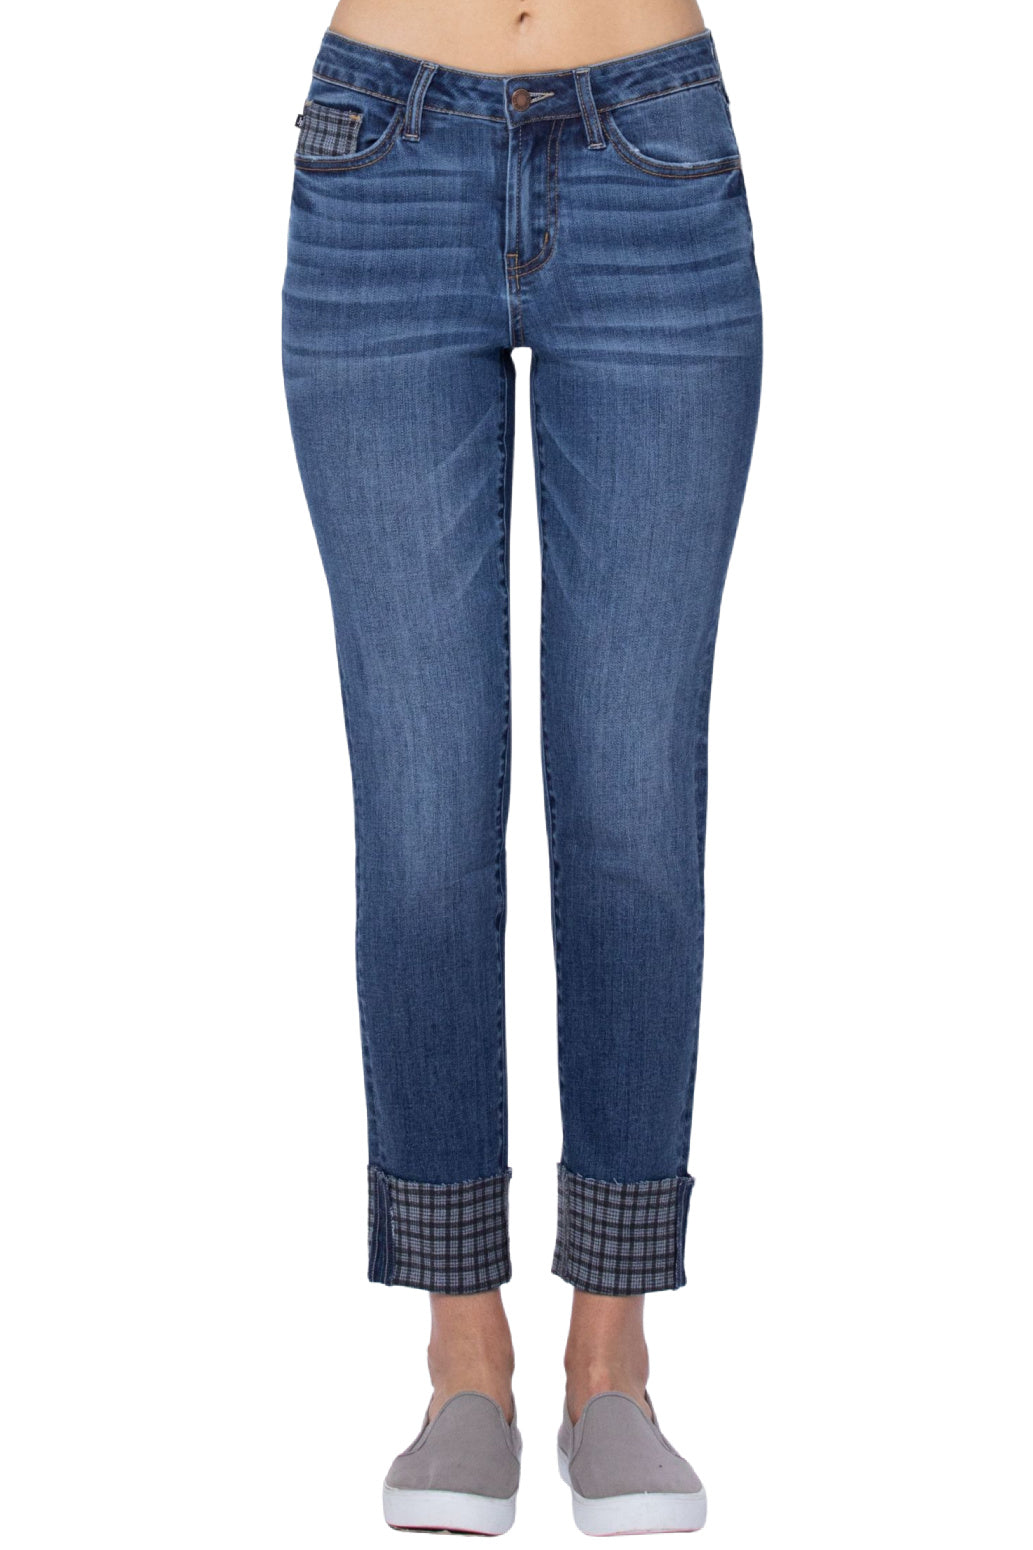 Judy Blue Grey Plaid Cuffed Slim Fit Mid Rise Jeans